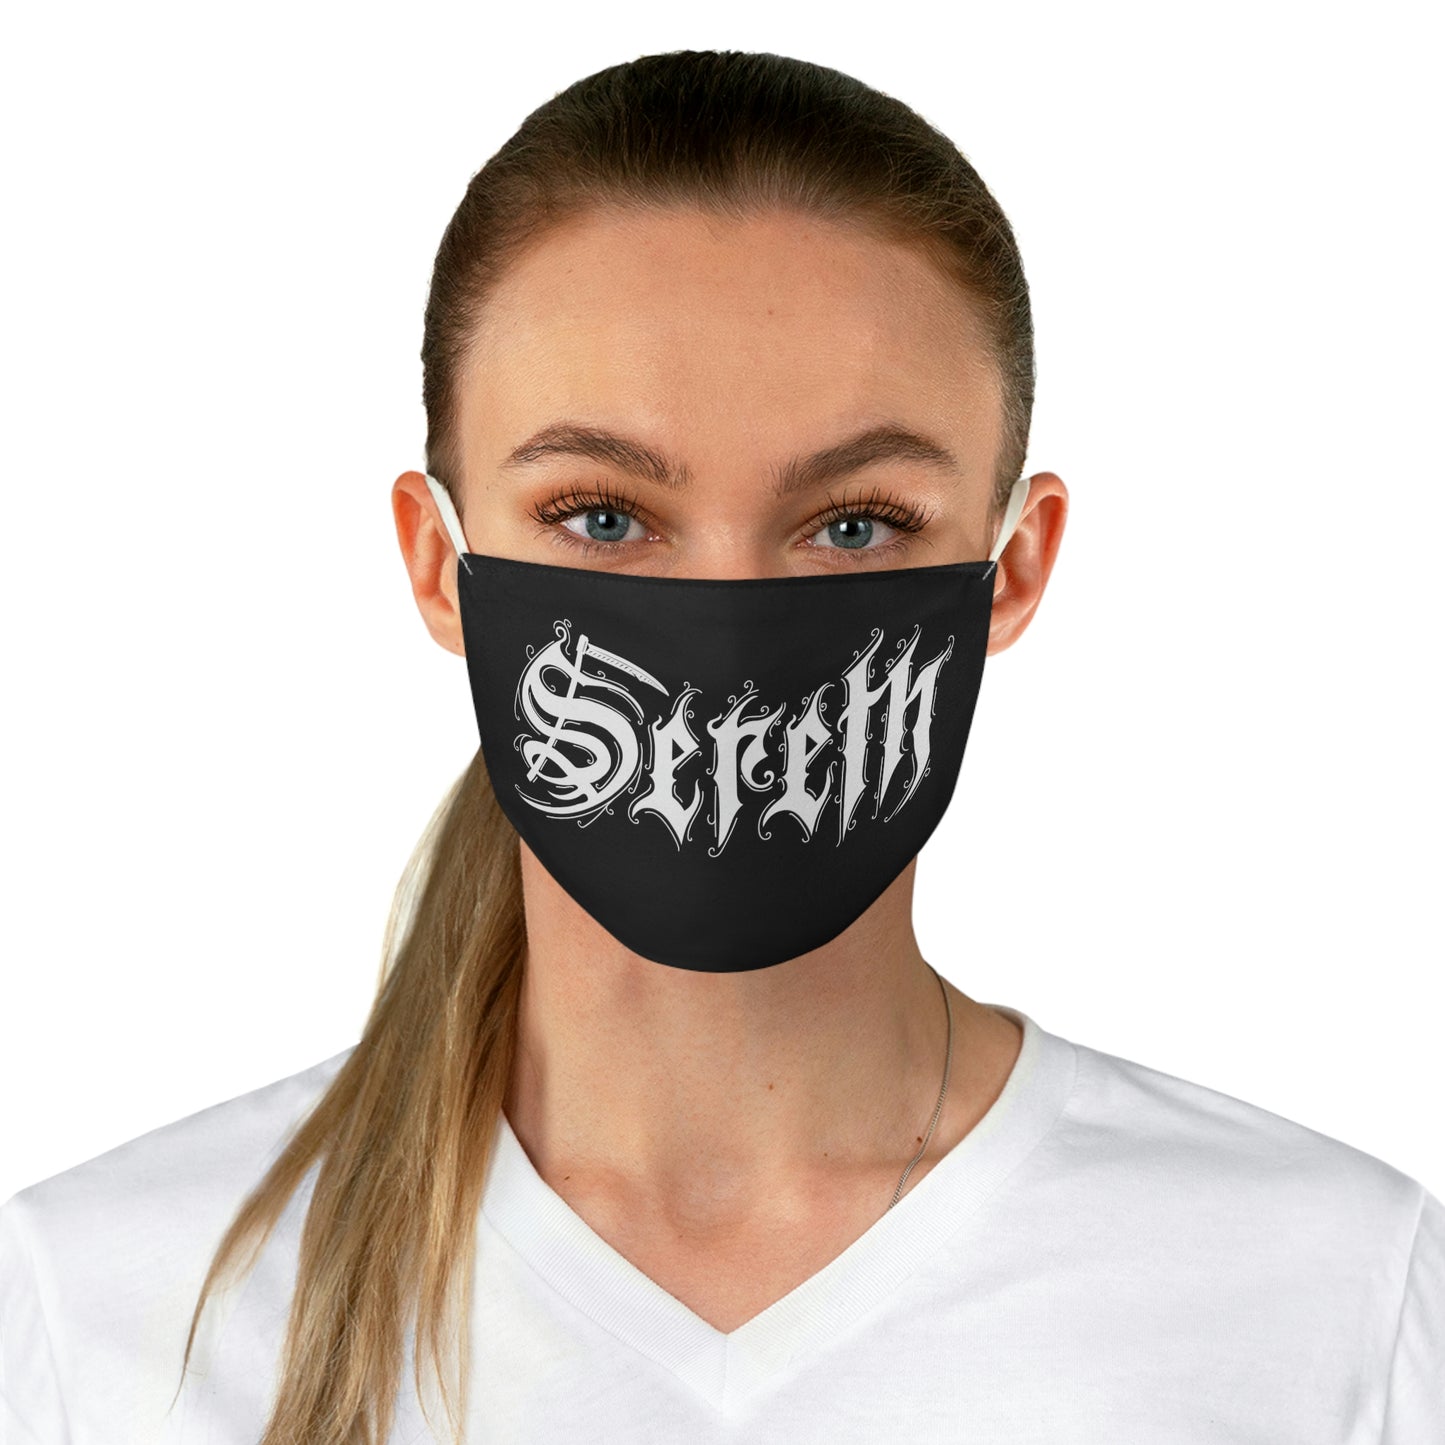 Sereth - (Black) Face Mask